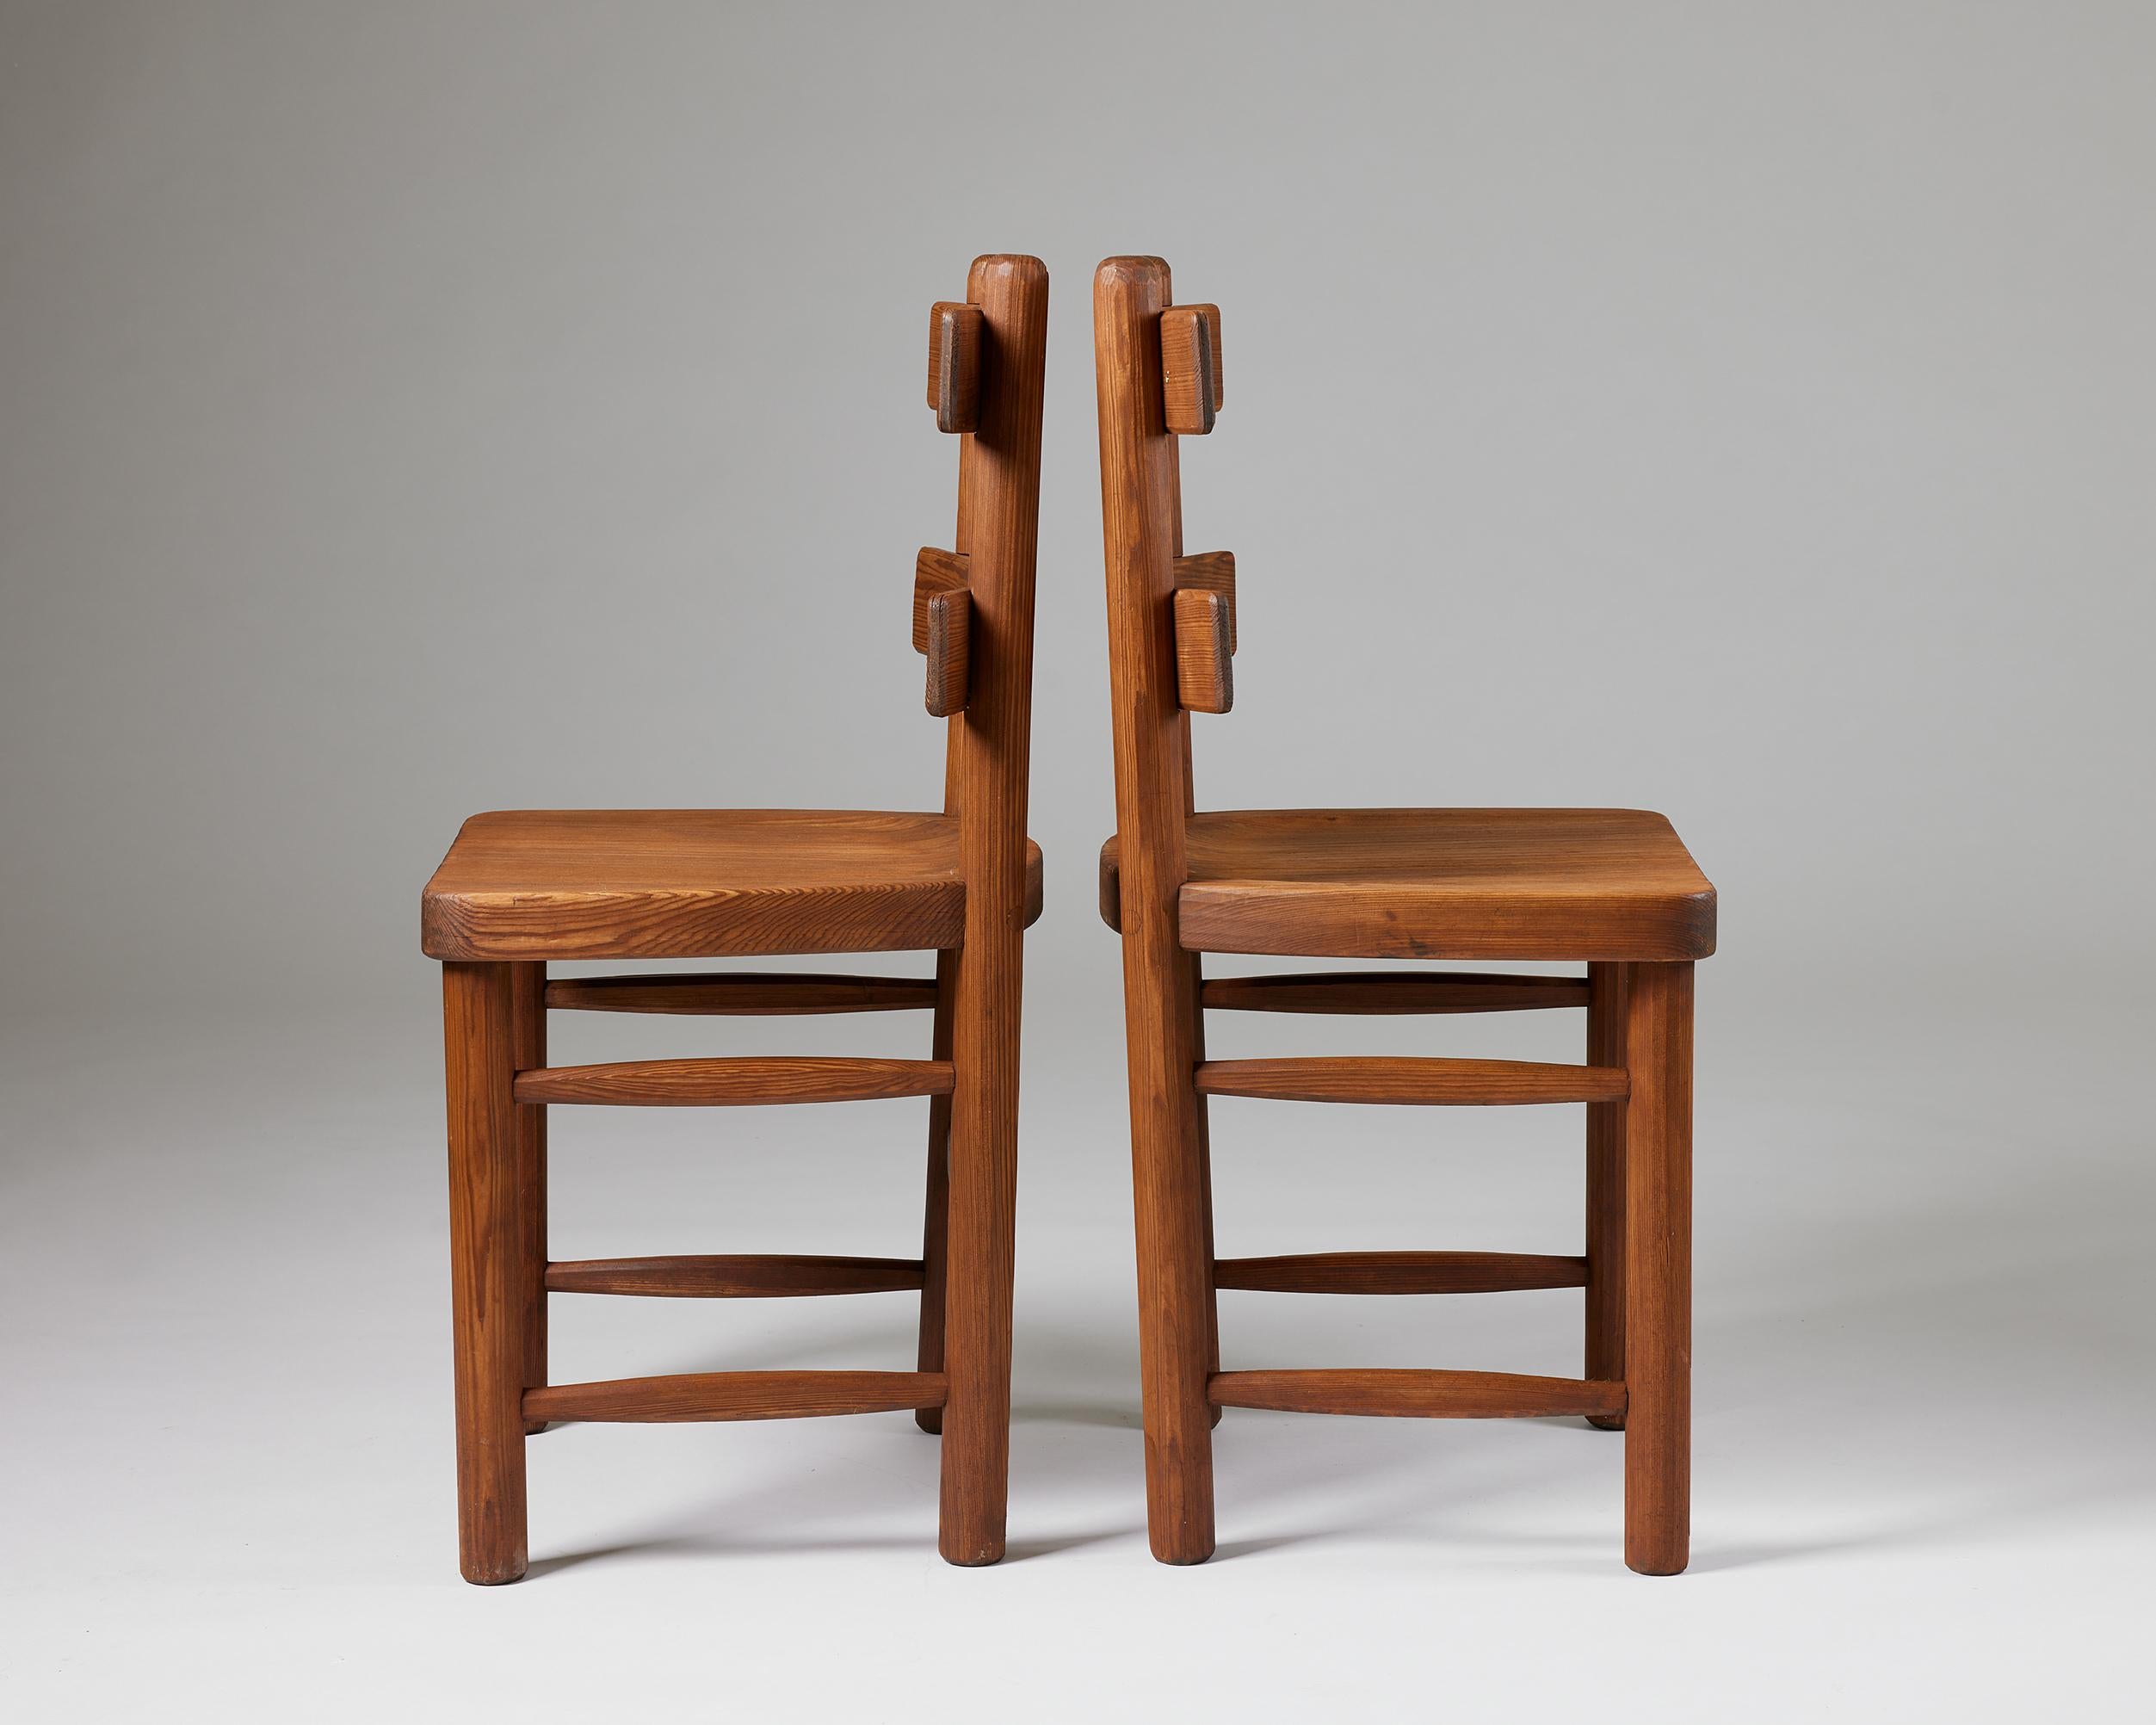 Swedish Pair of ‘Sandhamn’ Chairs Designed by Axel Einar Hjorth for Nordiska Kompaniet